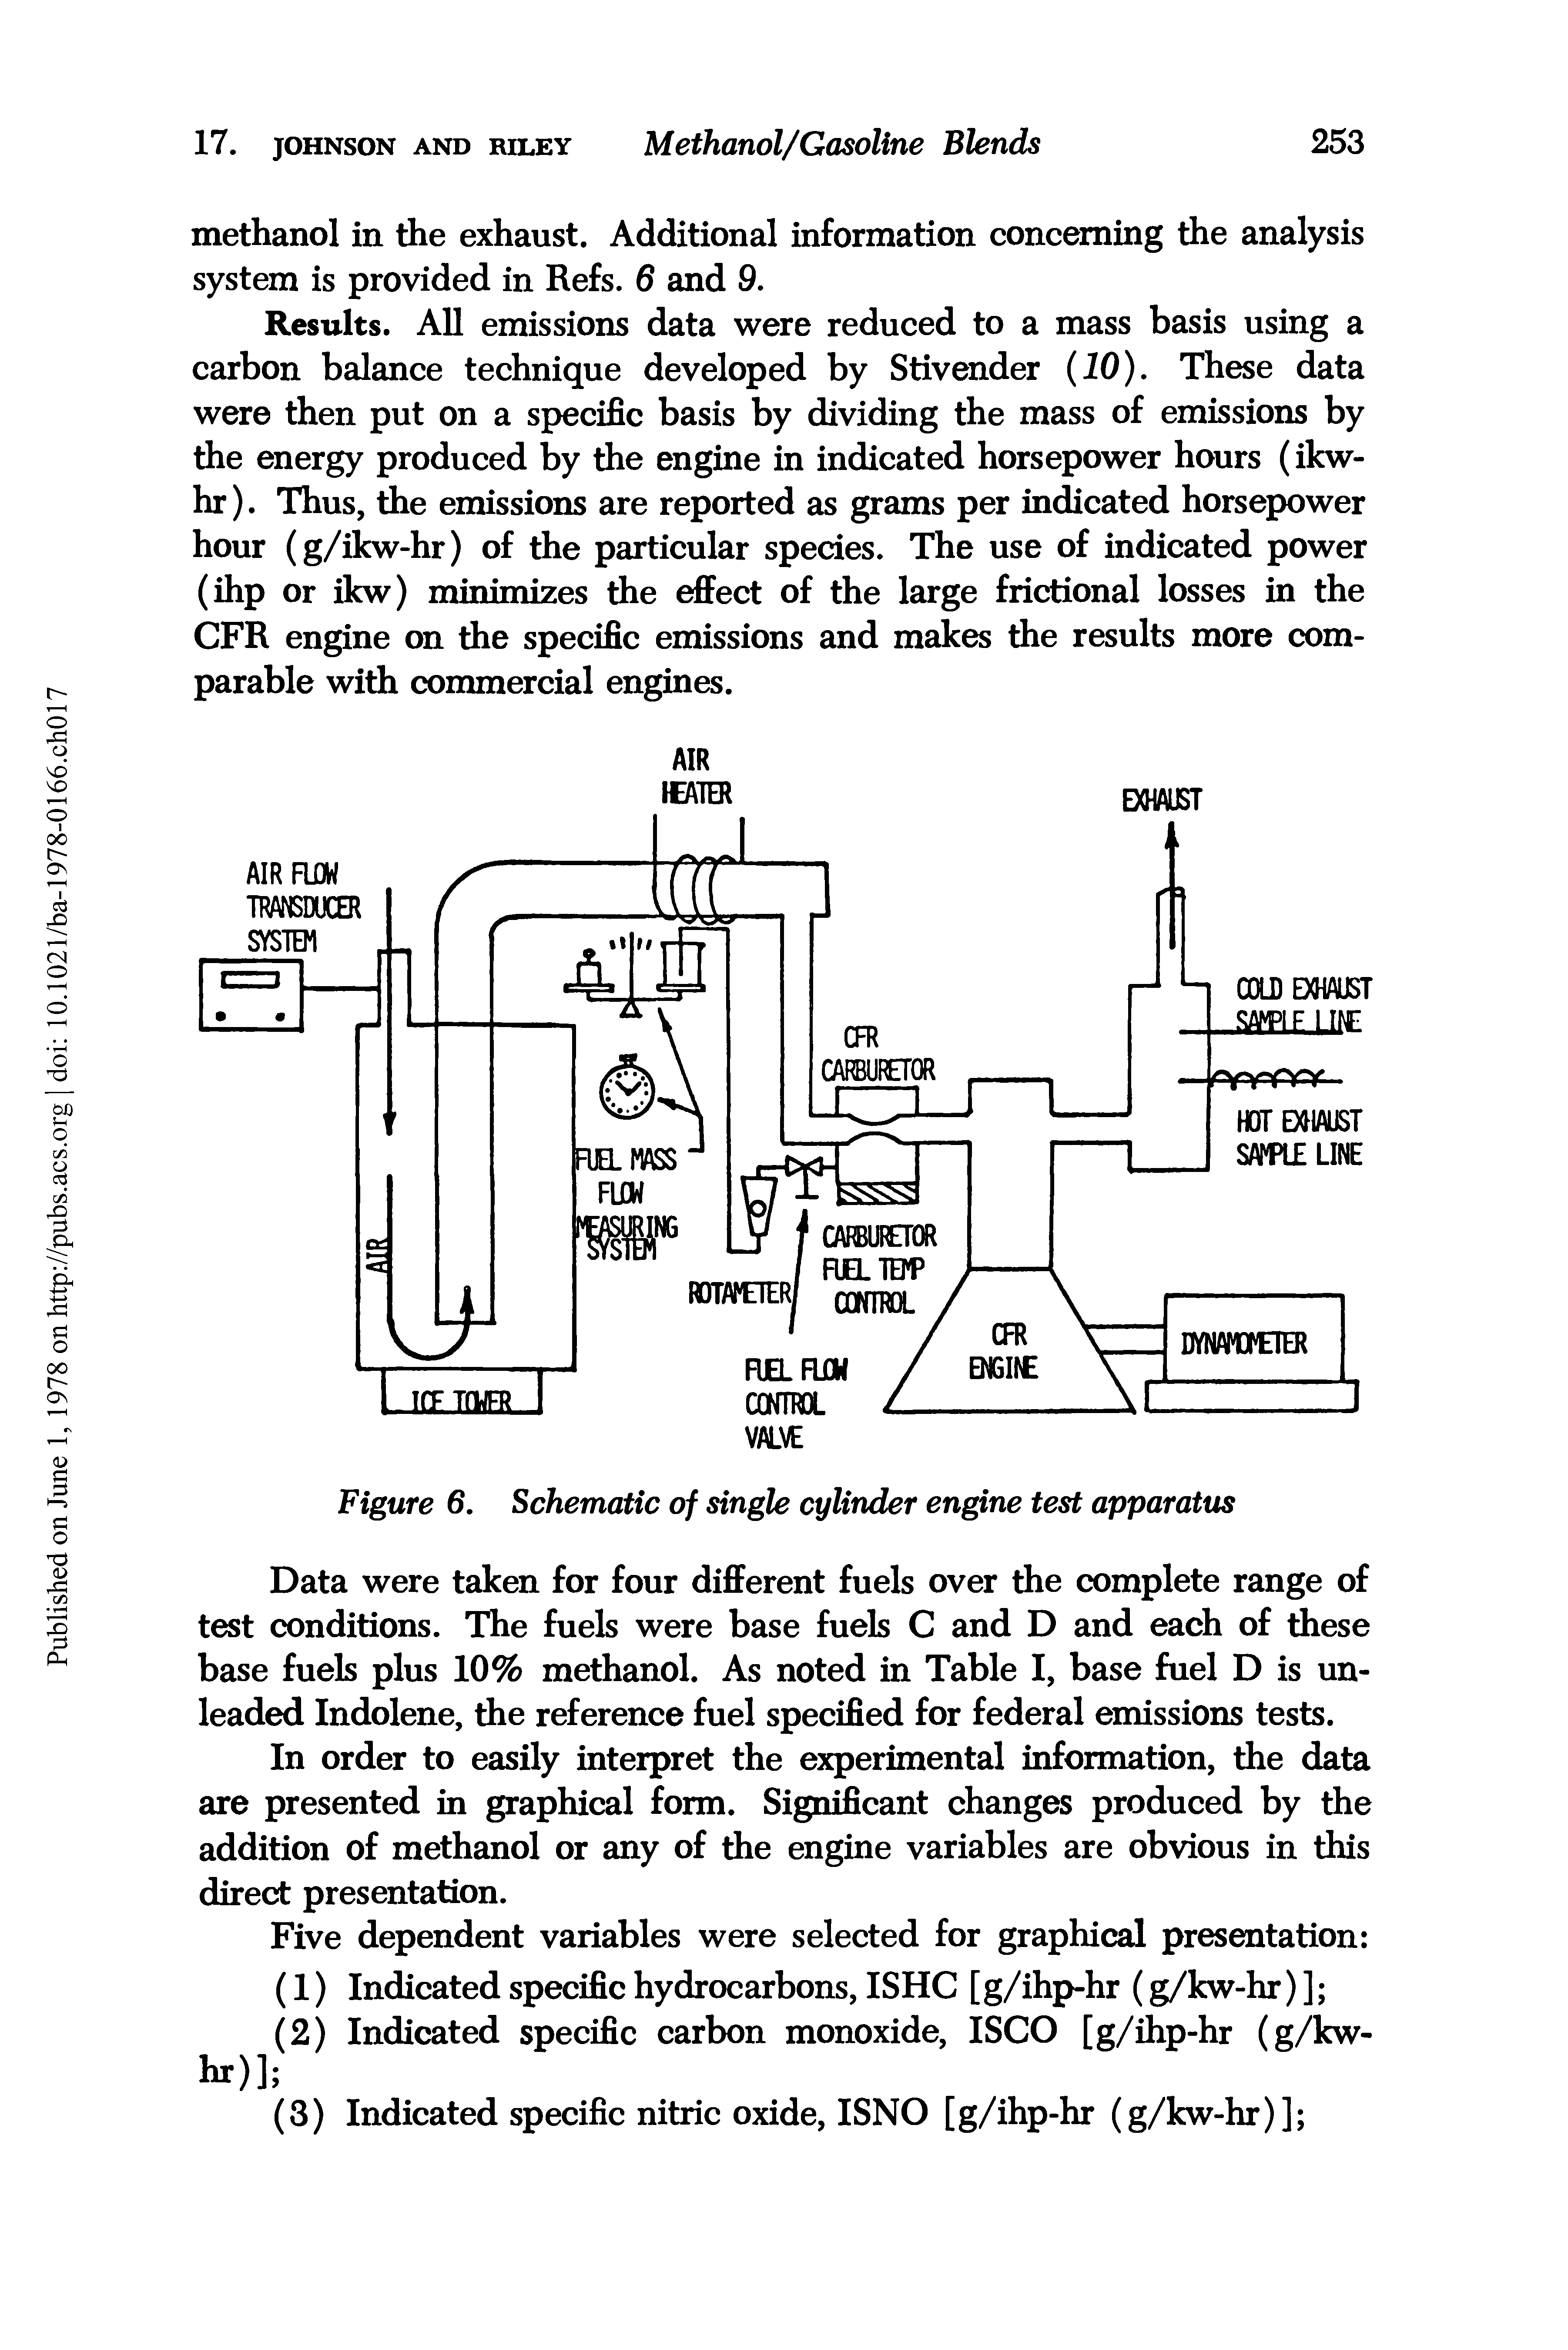 Figure 6. Schematic of single cylinder engine test apparatus...